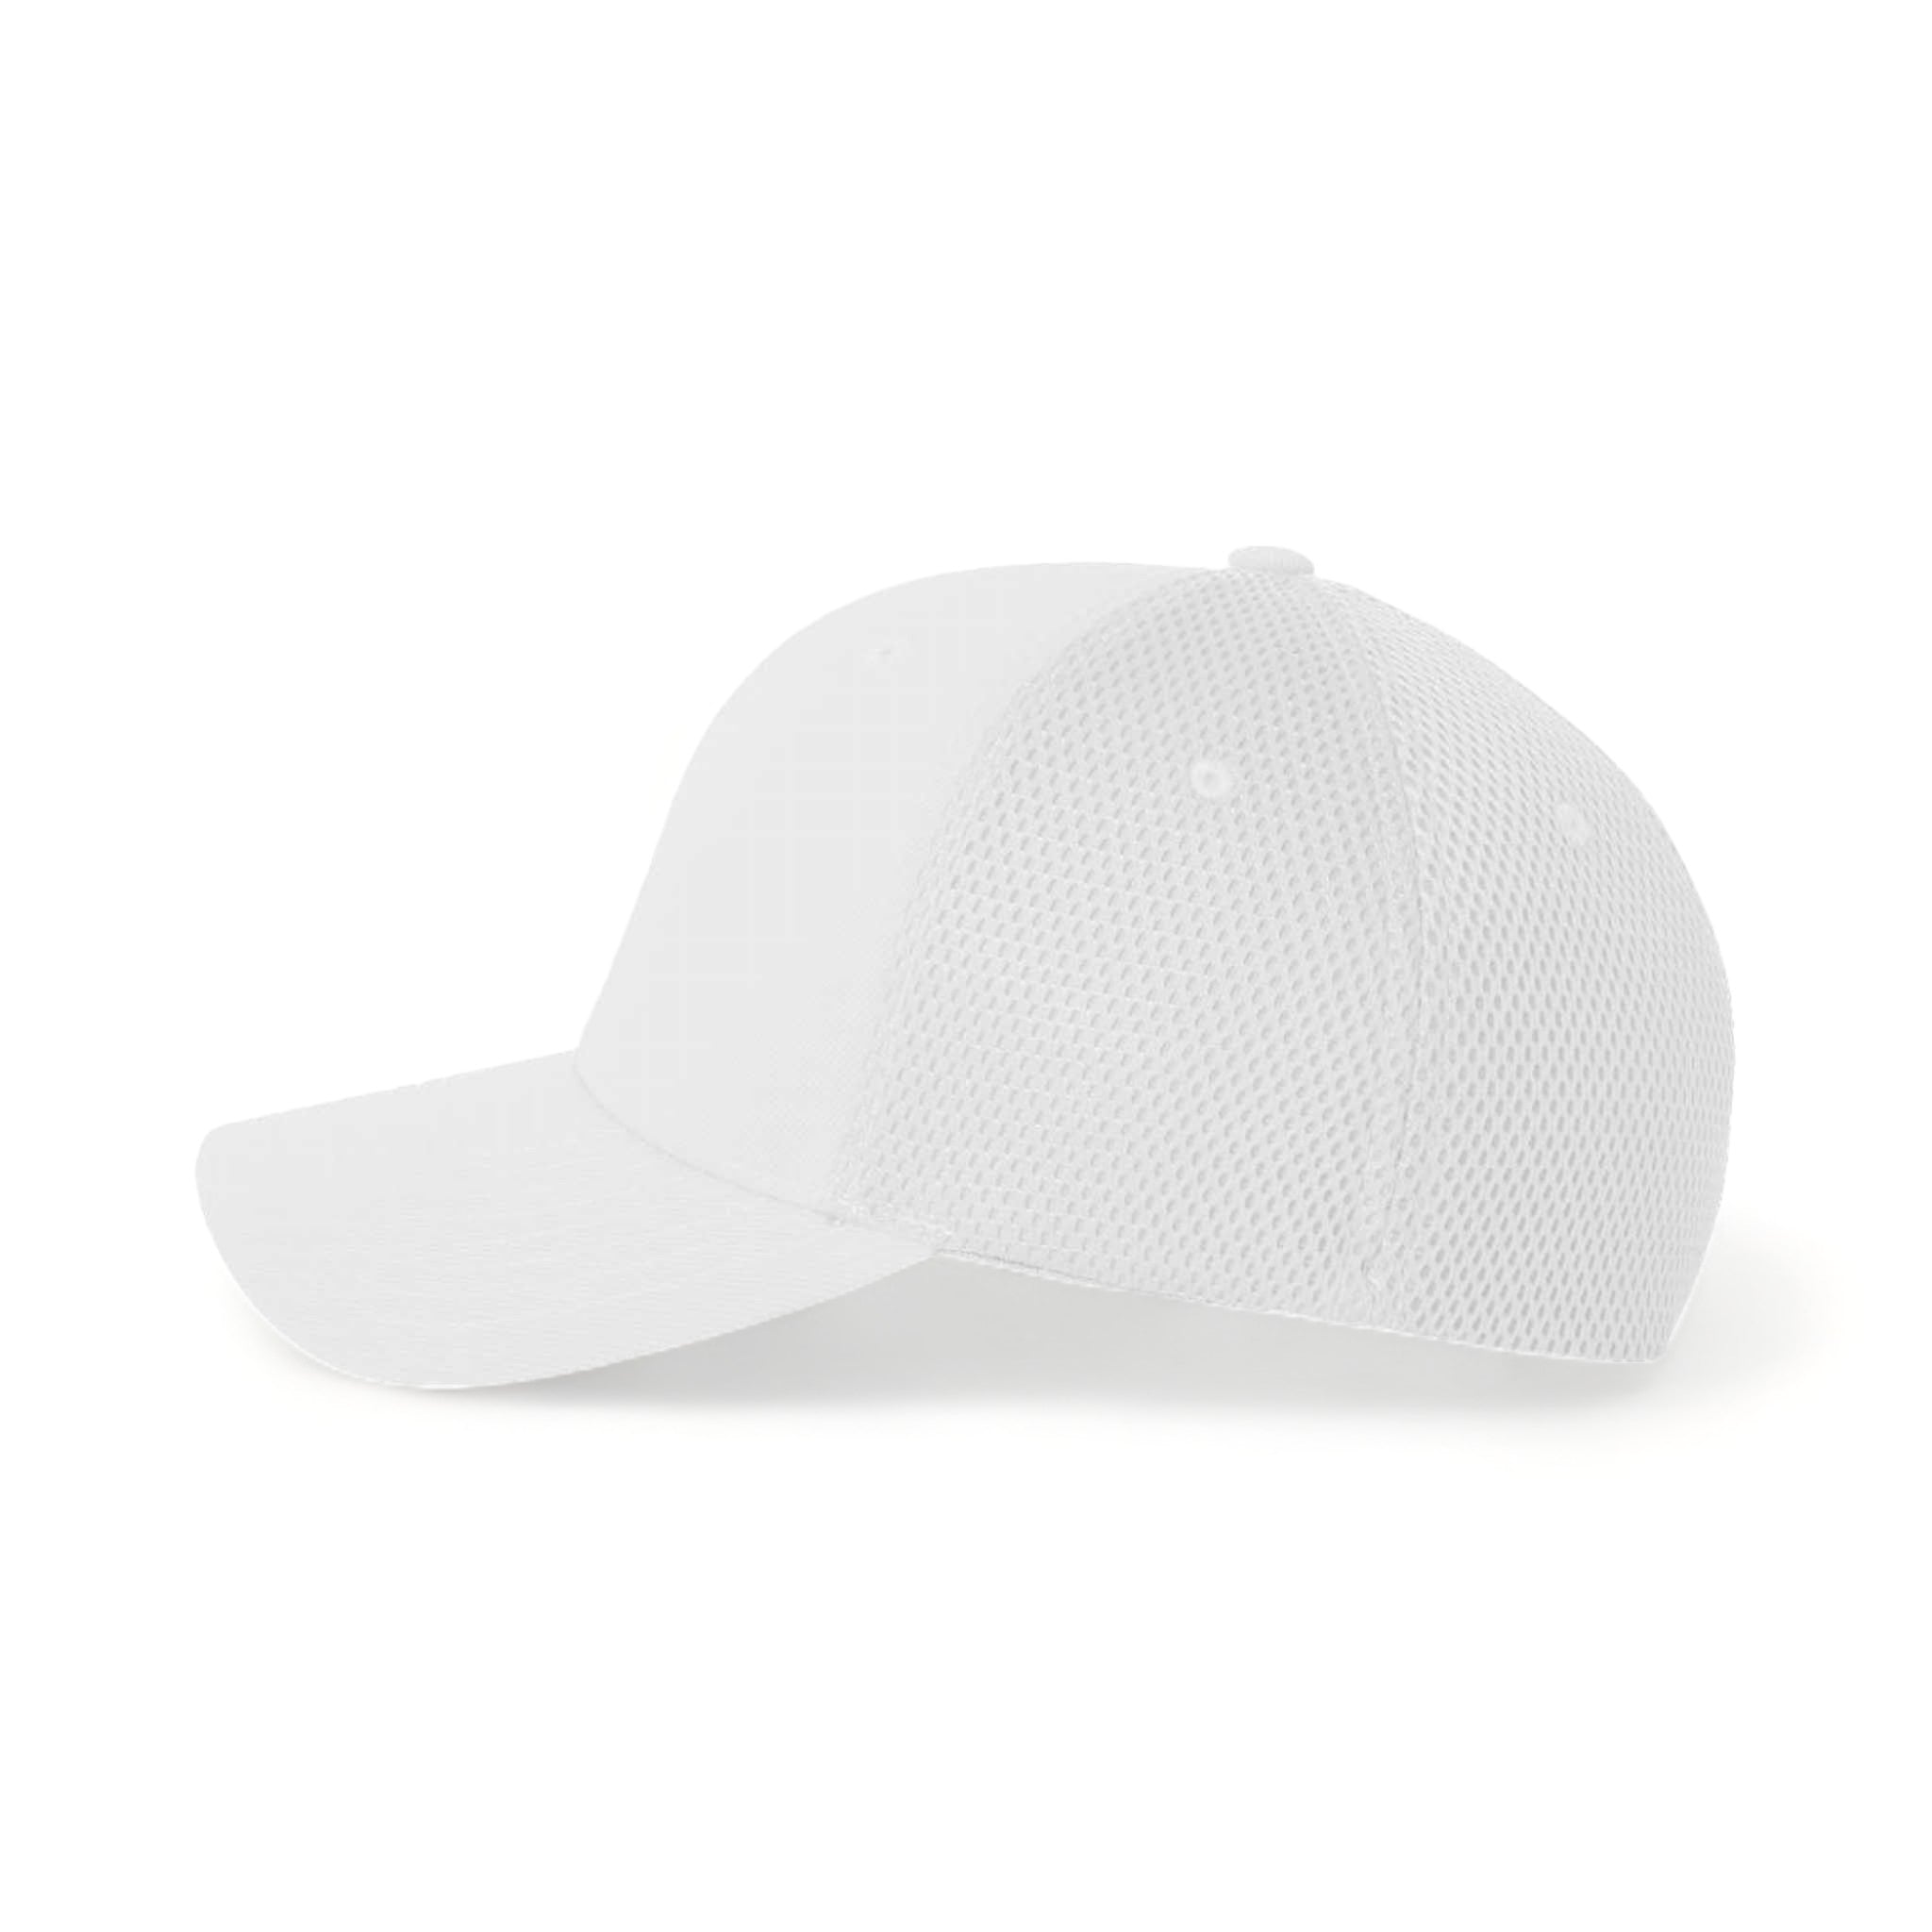 Side view of Flexfit 6533 custom hat in white